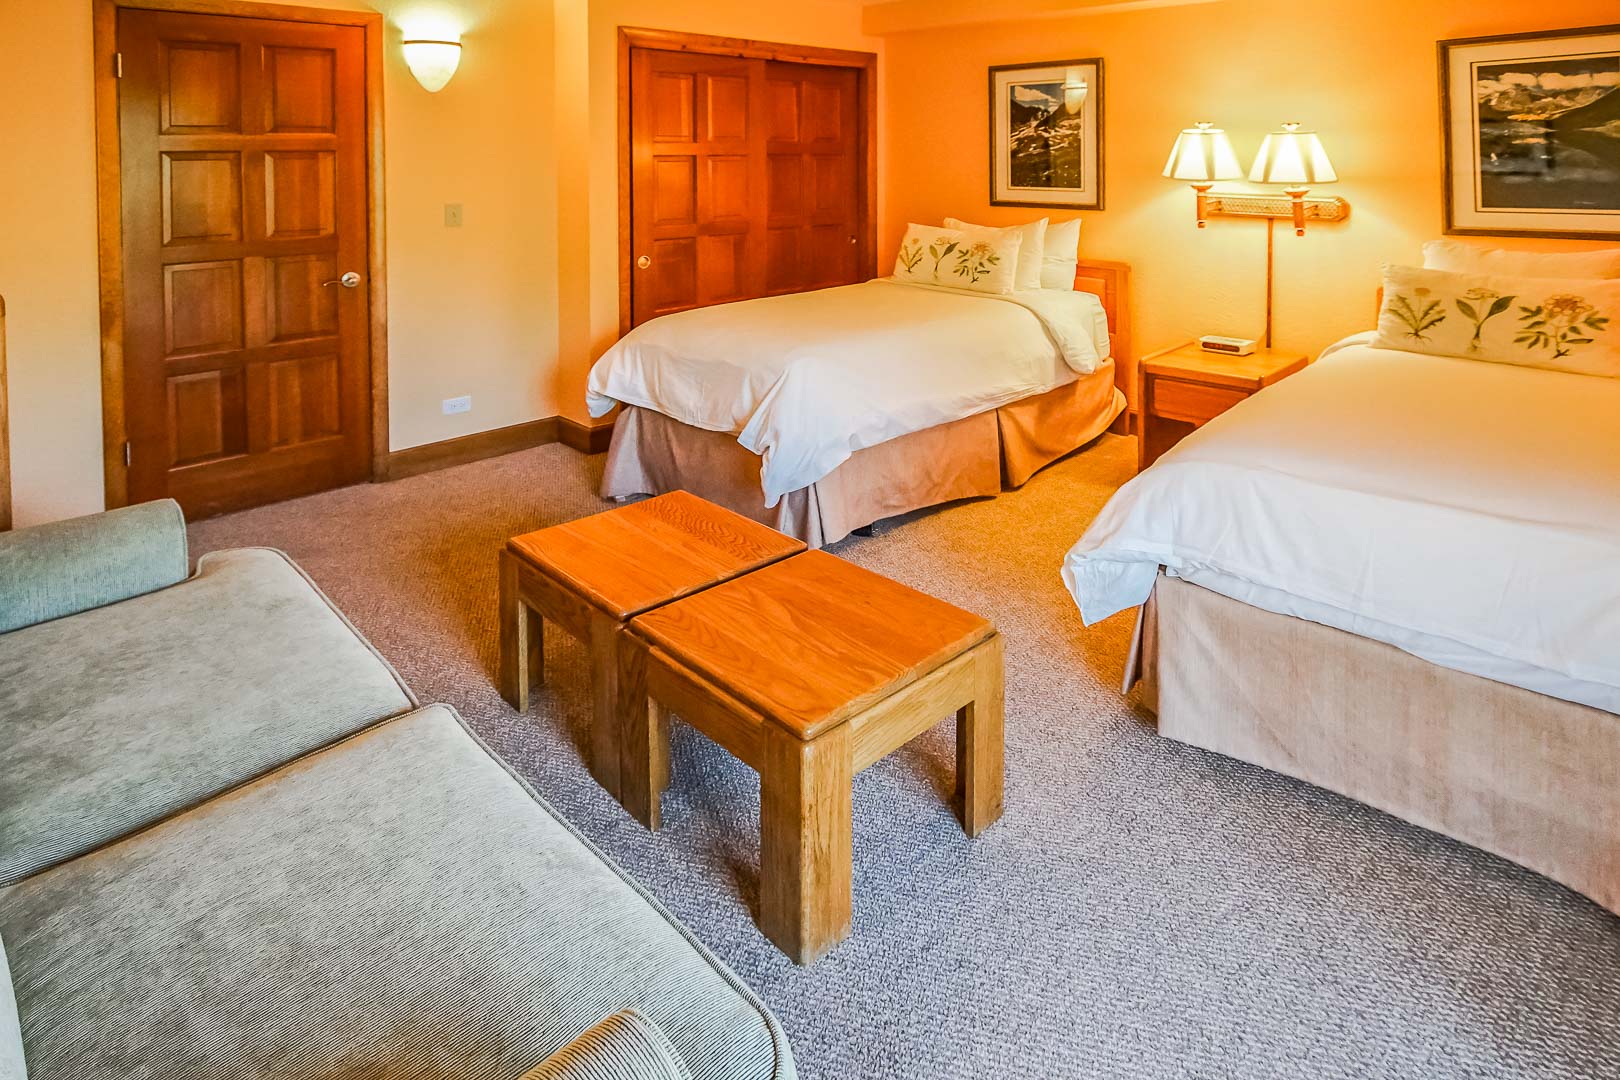 A spacious bedroom with double beds at VRI's Cedar at Streamside in Colorado.